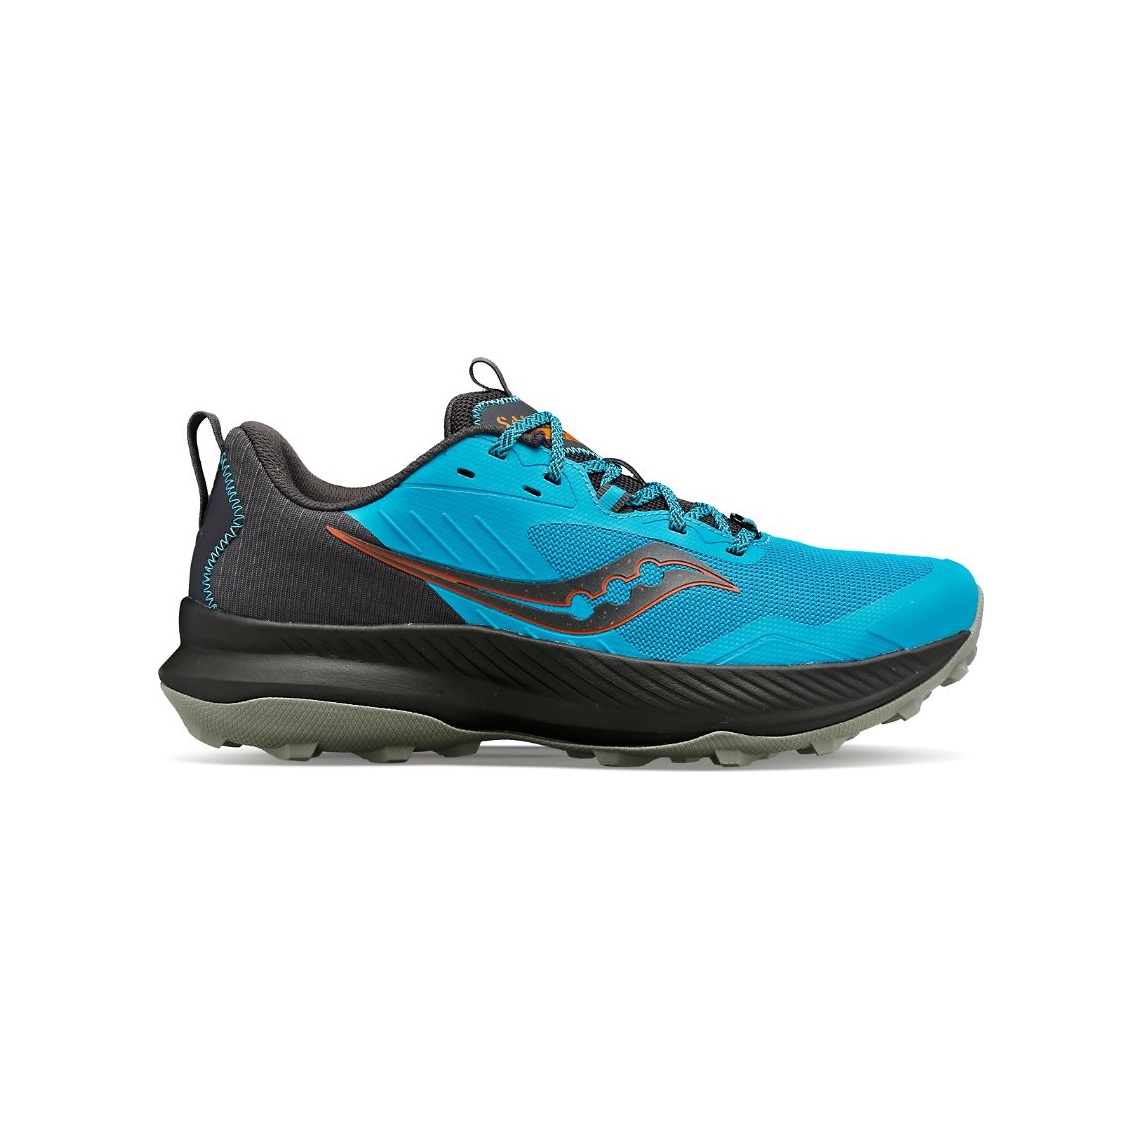 Zapatillas de trail running para hombre - saucony Blaze TR - S20845-25, Ferrer Sport